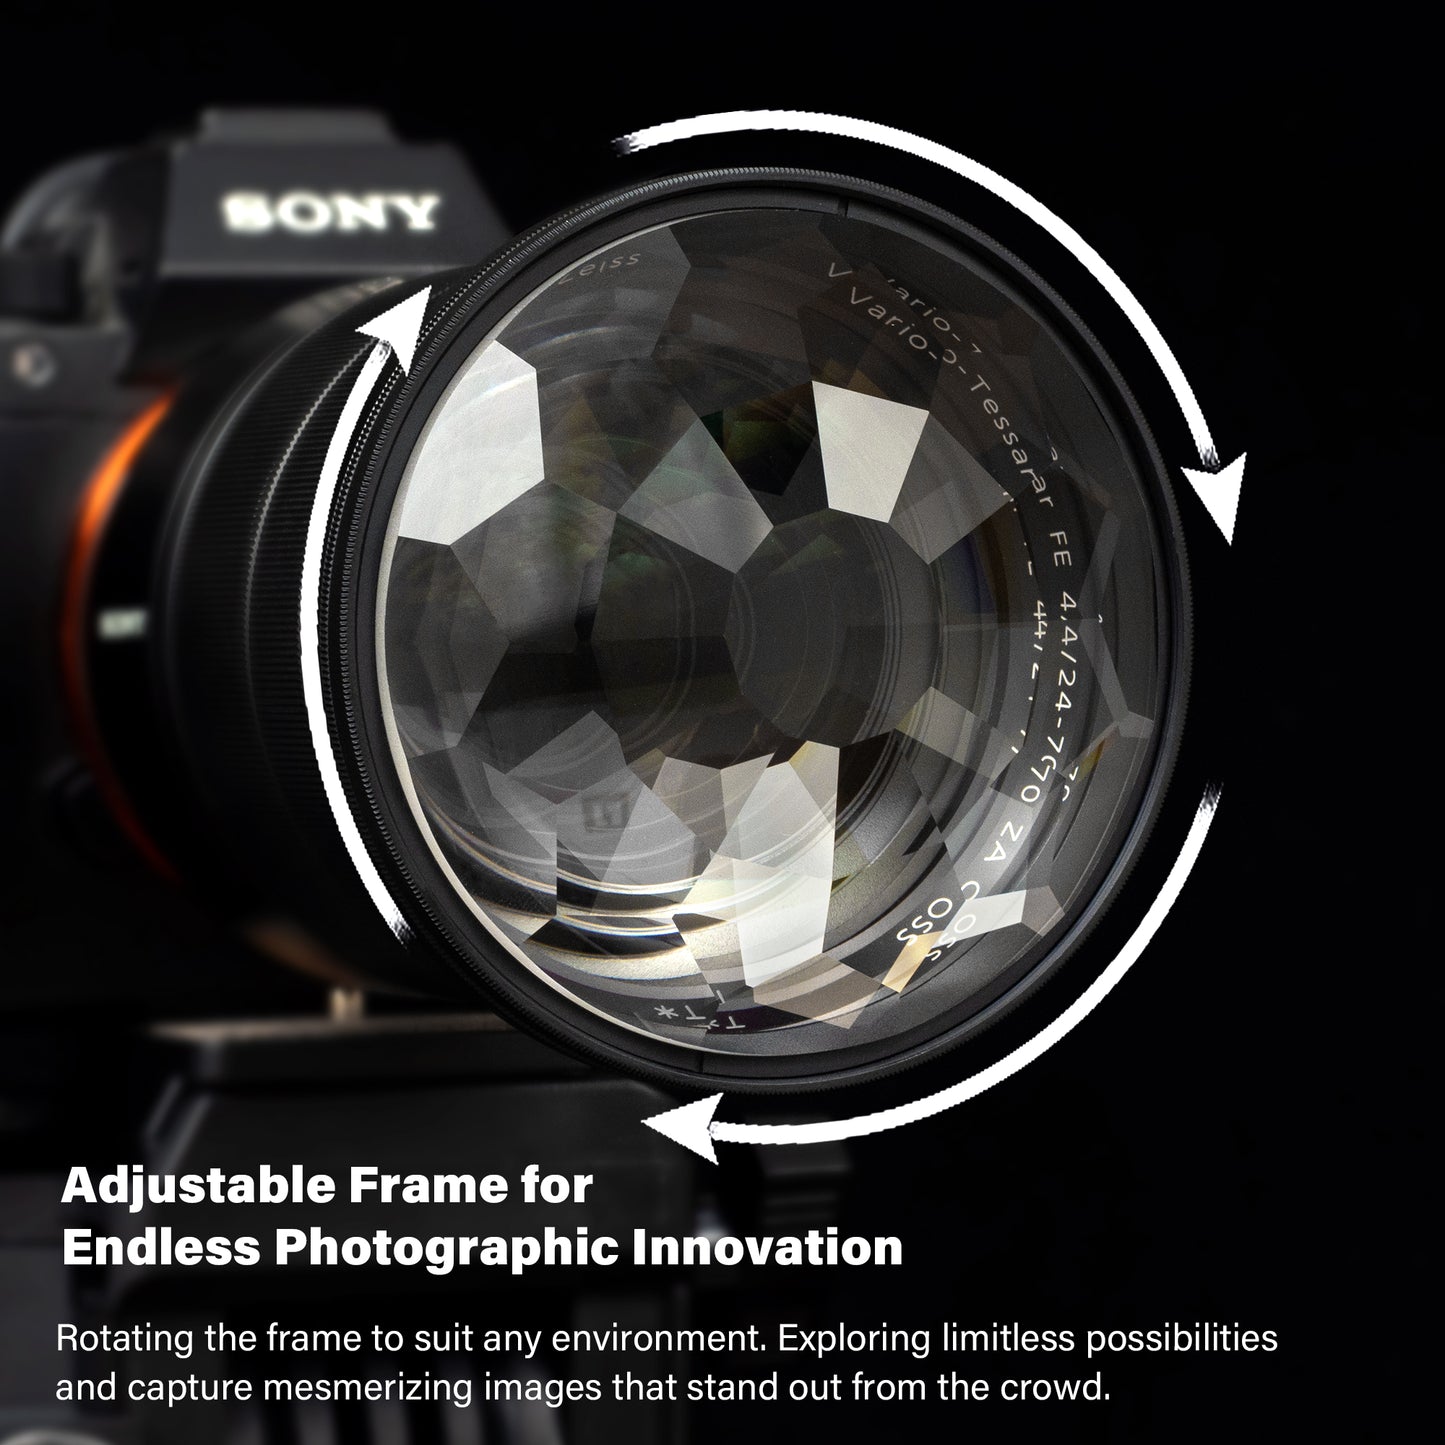 Kaleidoscope Prism Lens FX Filter